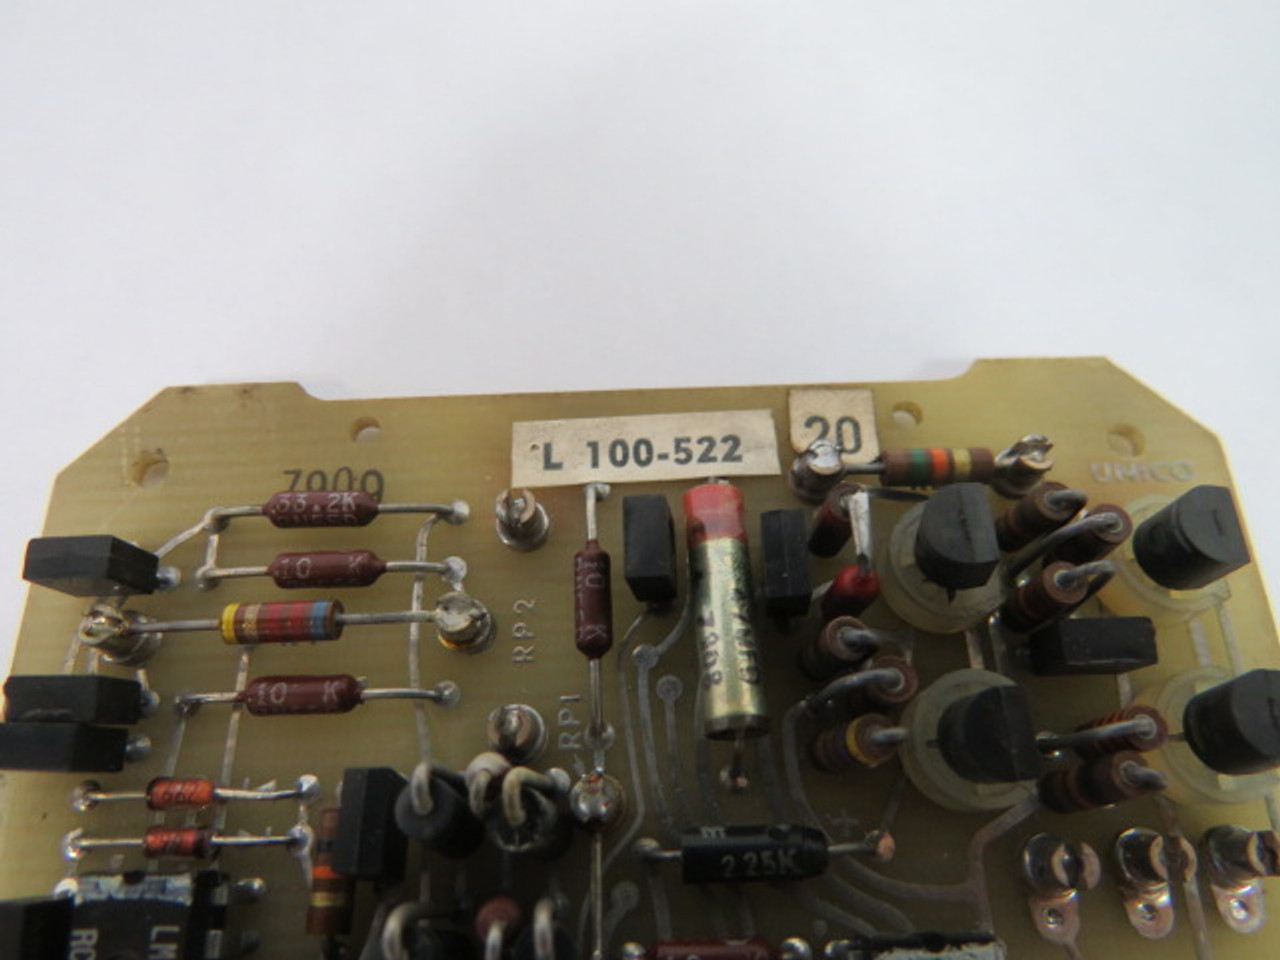 Unico 300-792-J L100-522 Power Supply Circuit Board USED